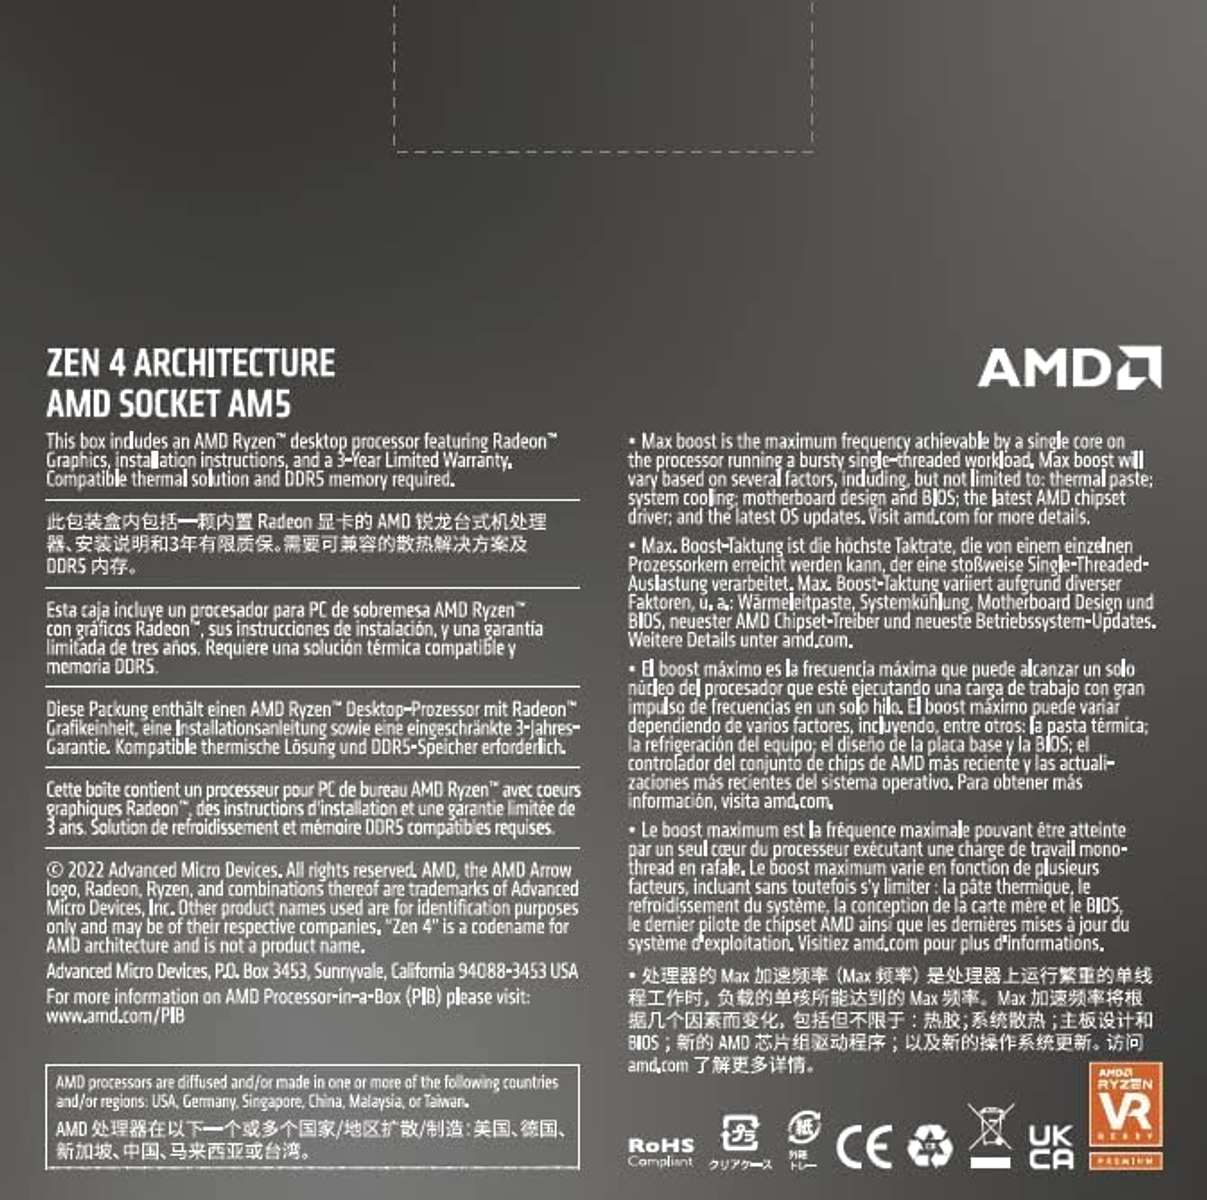 Mehrfarbig 7600X 5 RYZEN Prozessor, AMD 100-100000593WOF